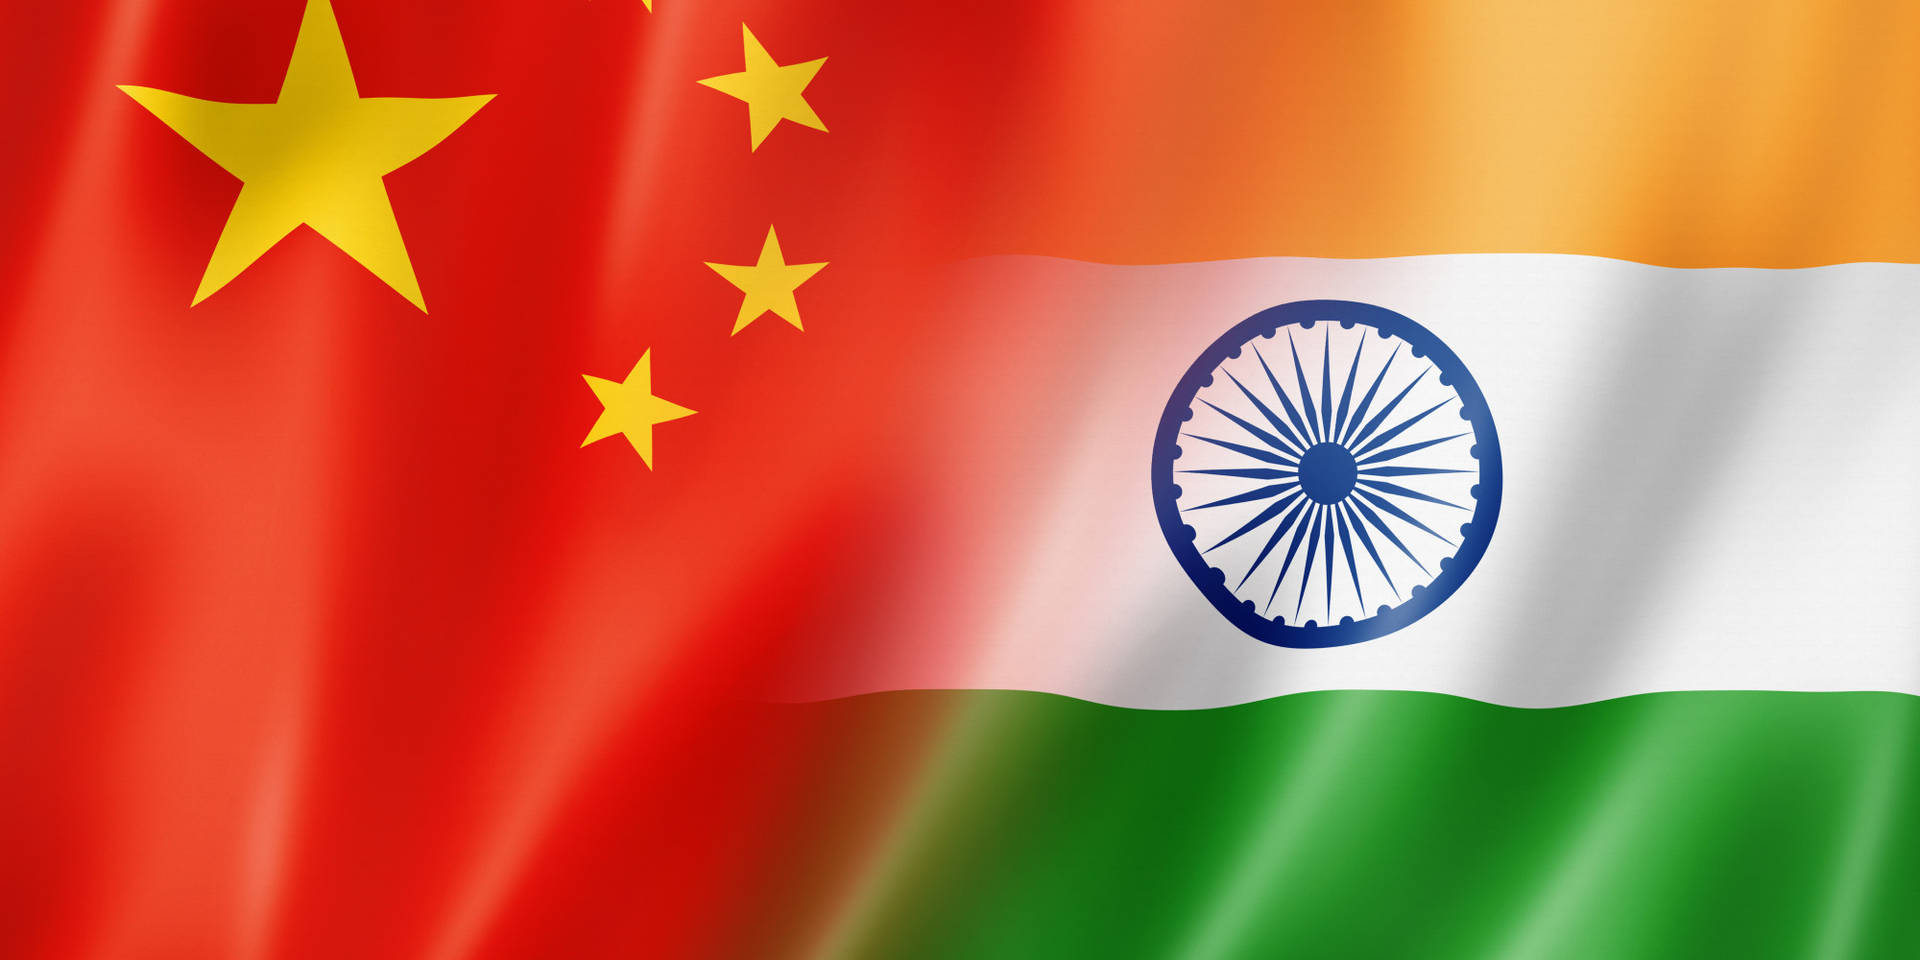 China And India Flag